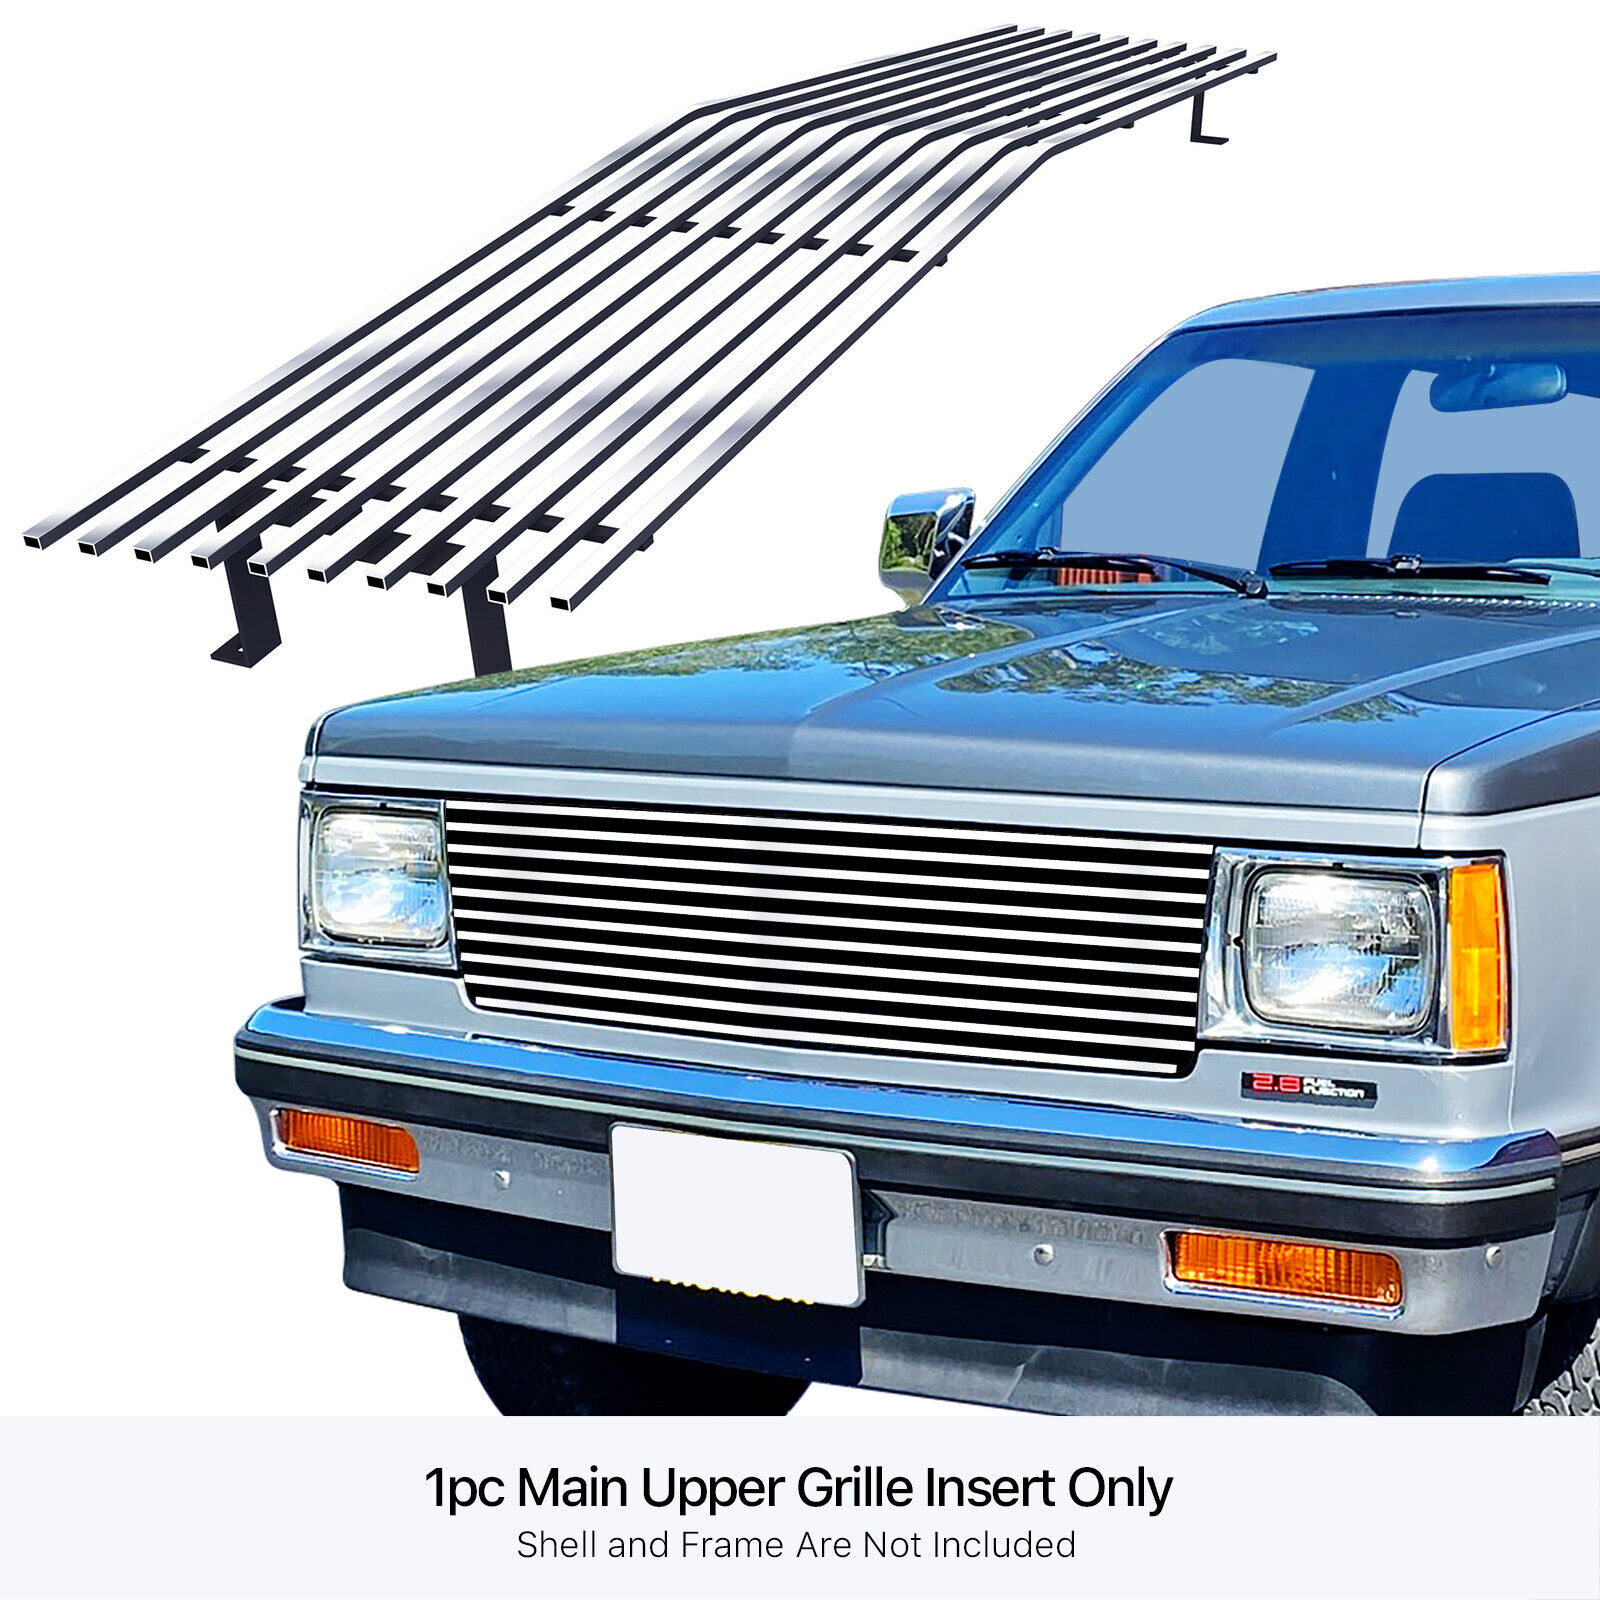 Fits 1982-1990 Chevy S-10 Pickup/Blazer/S-15/Jimmy Main Upper Billet Grille